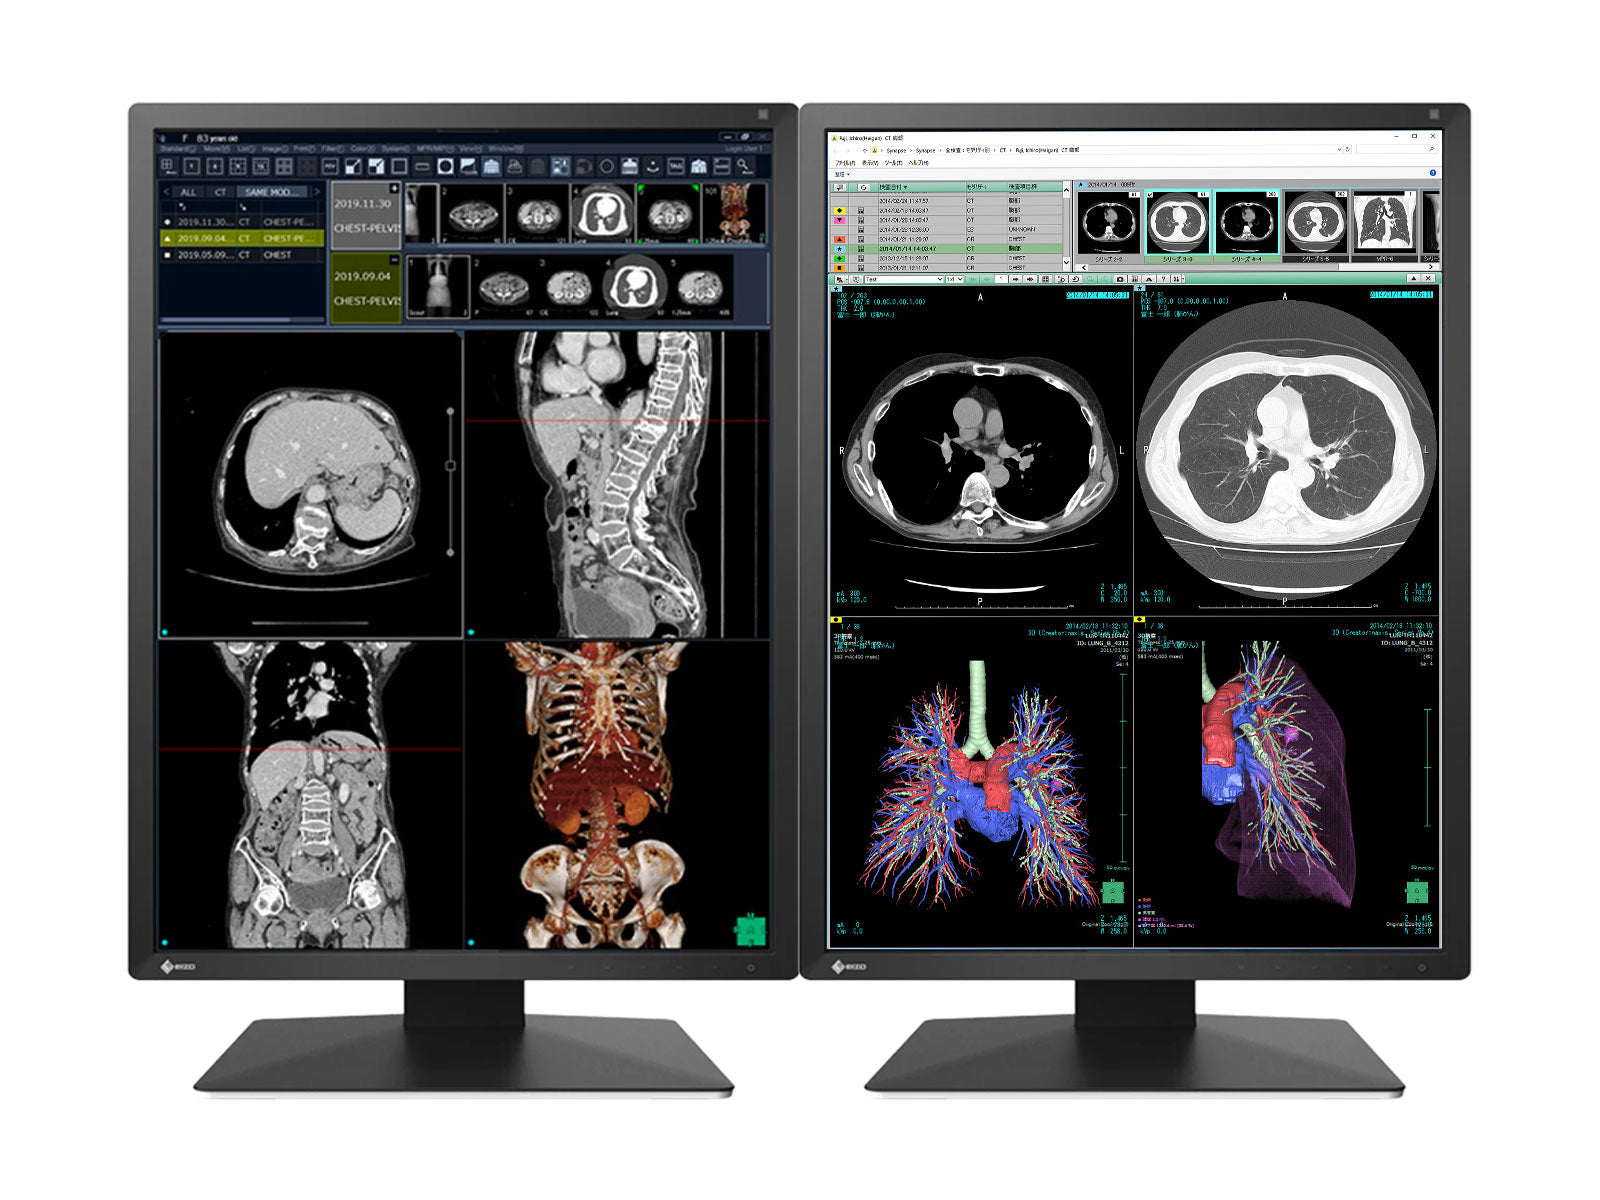 Eizo RadiForce RX270 2MP 21" Color LED Medical Diagnostic Radiology Display Monitor (RX270-BK)